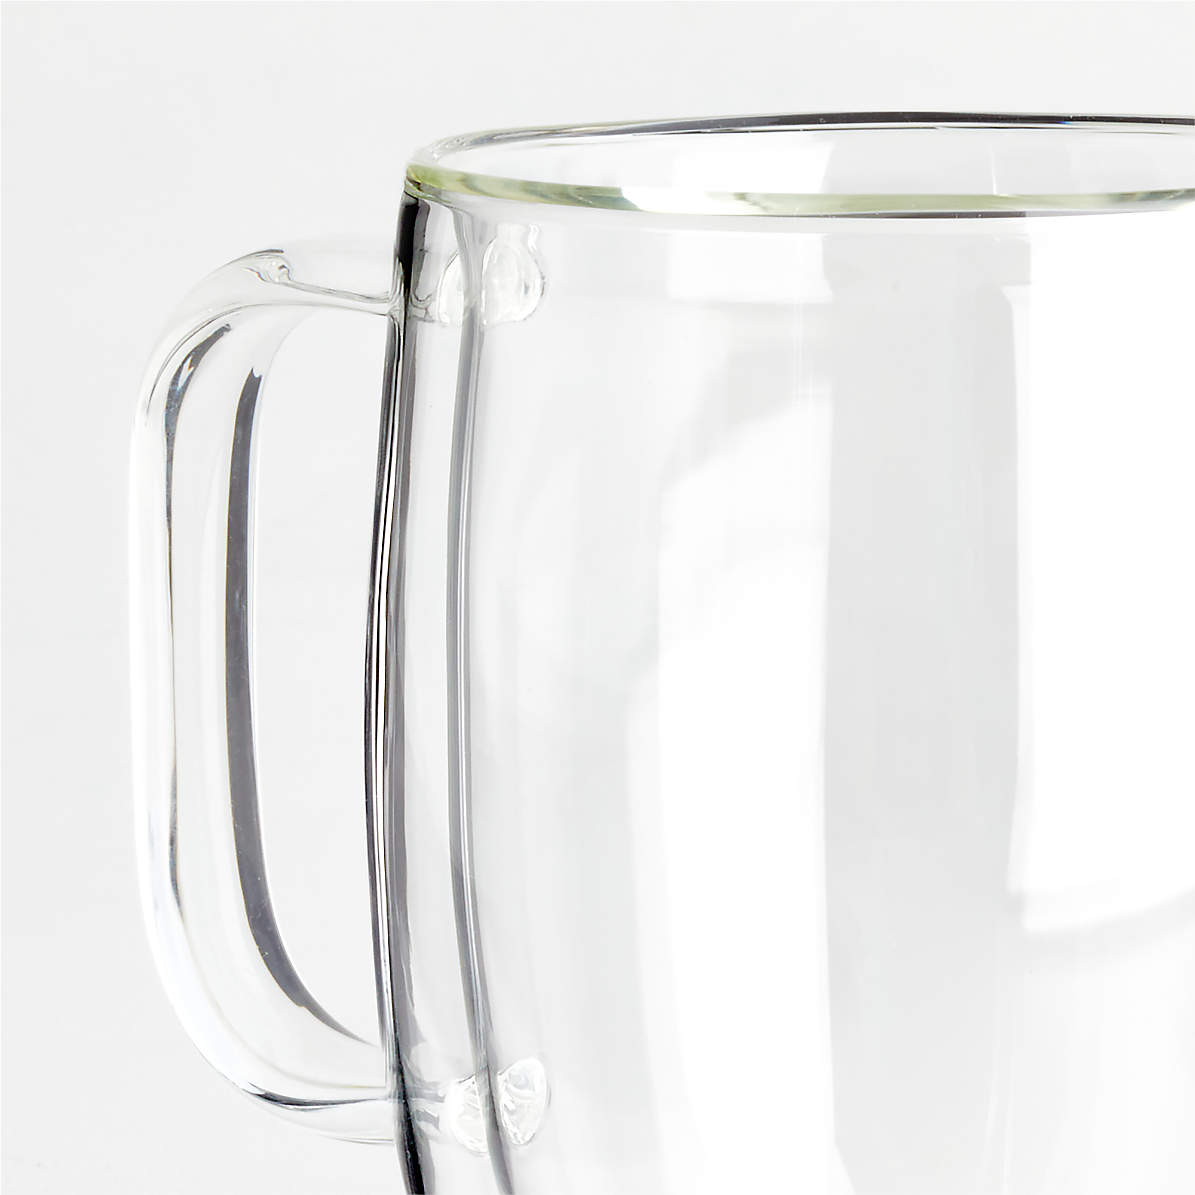 Zwilling J.A. Henckels Sorrento Plus 8-pc Double Wall Glass Coffee Mug Set, 12 oz Capacity